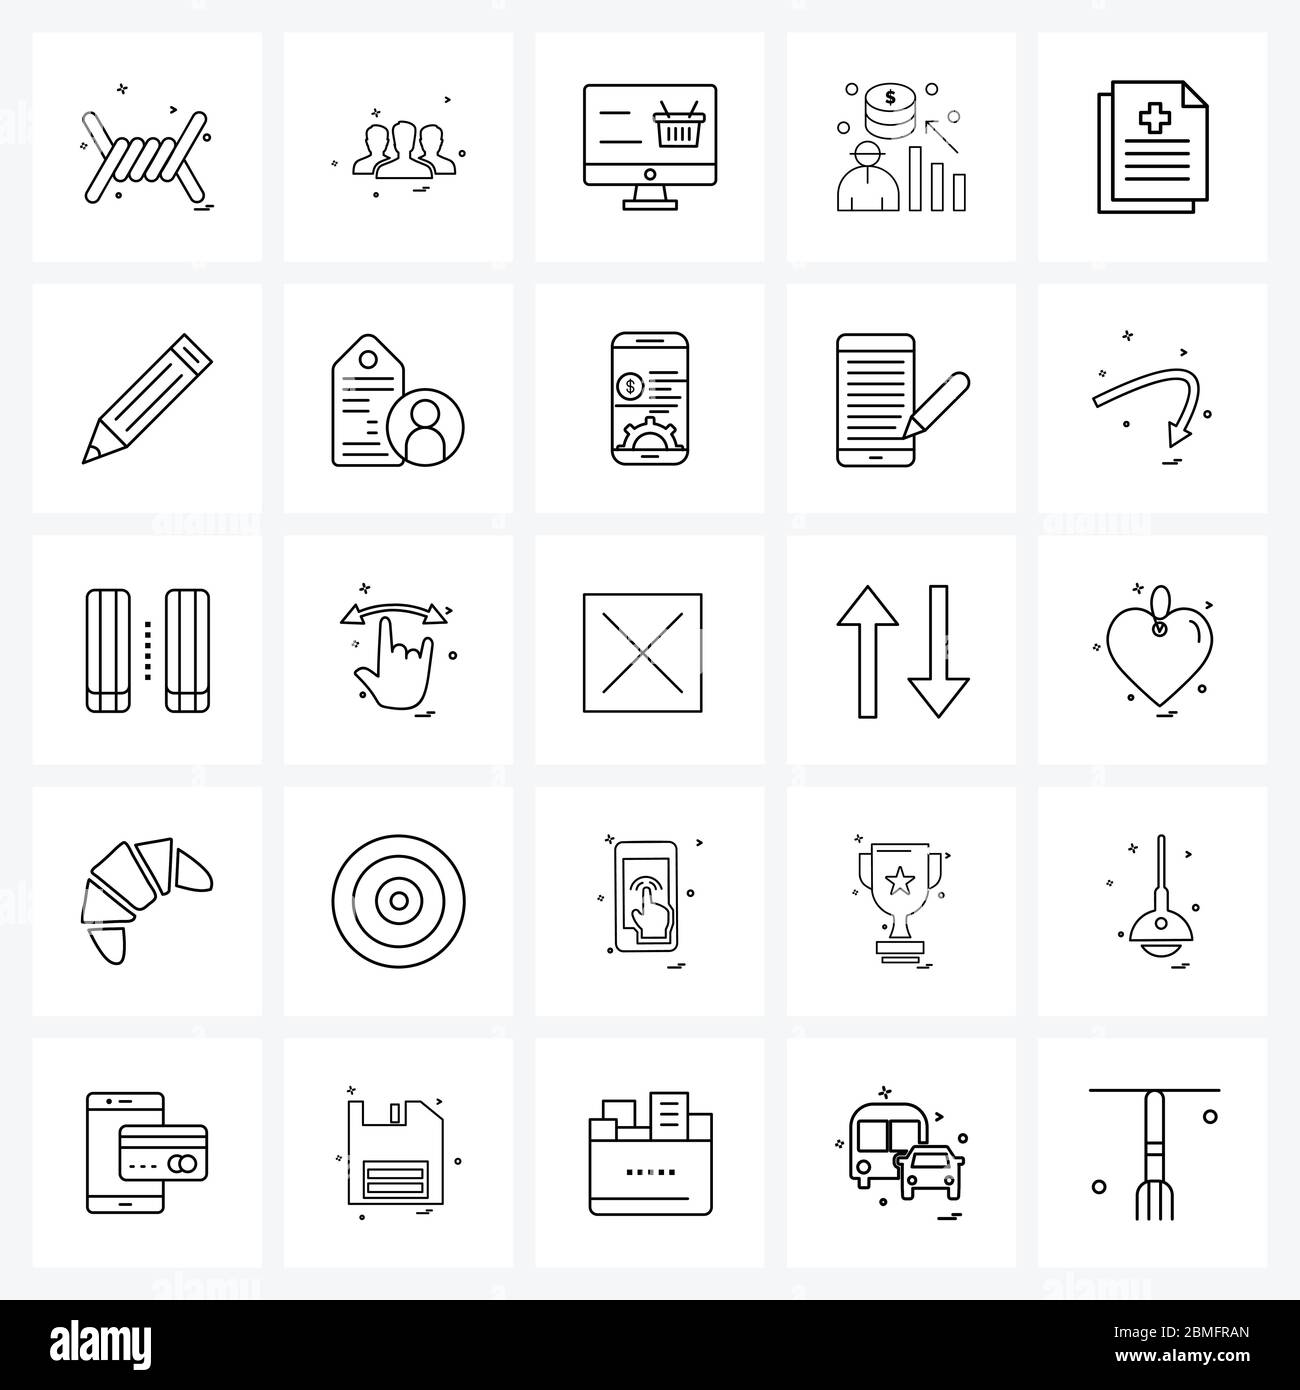 25 Interface Line Icon Set of modern symbols on healthcare, file ...